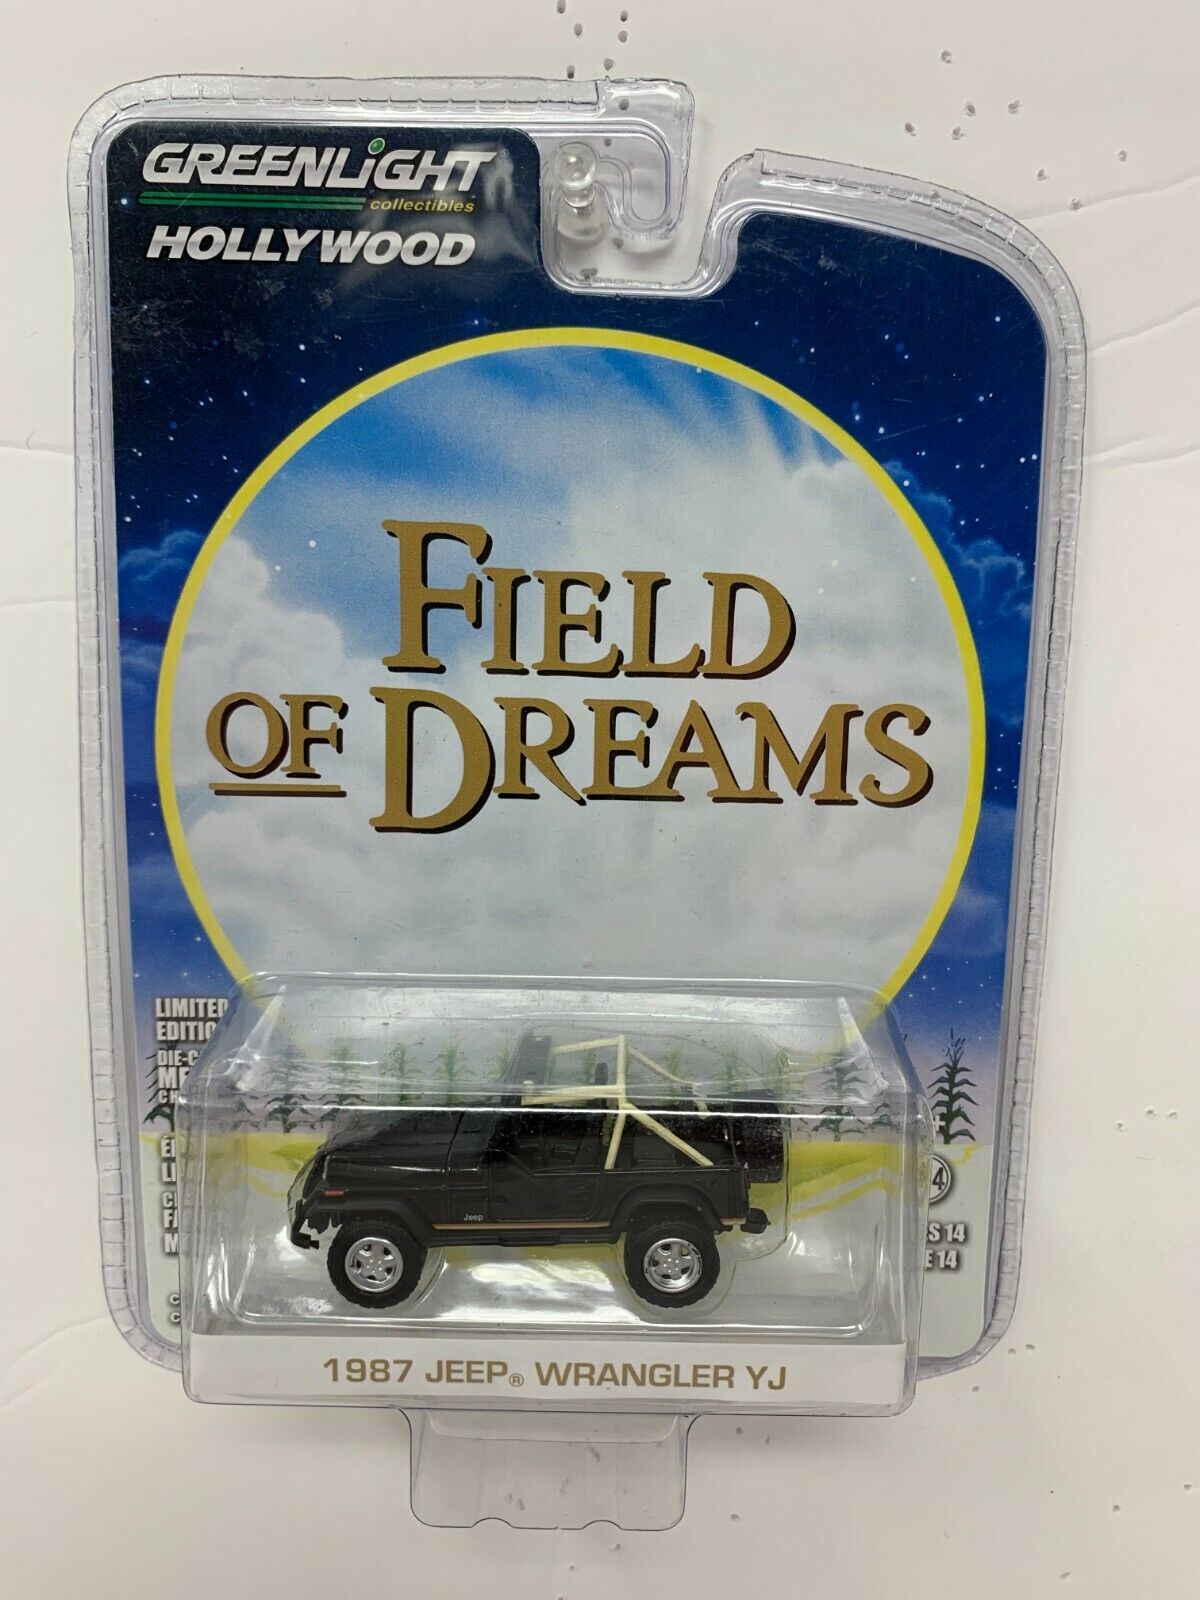 Greenlight Hollywood Field of Dreams 1987 Jeep Wrangler YJ 1:64 Diecast